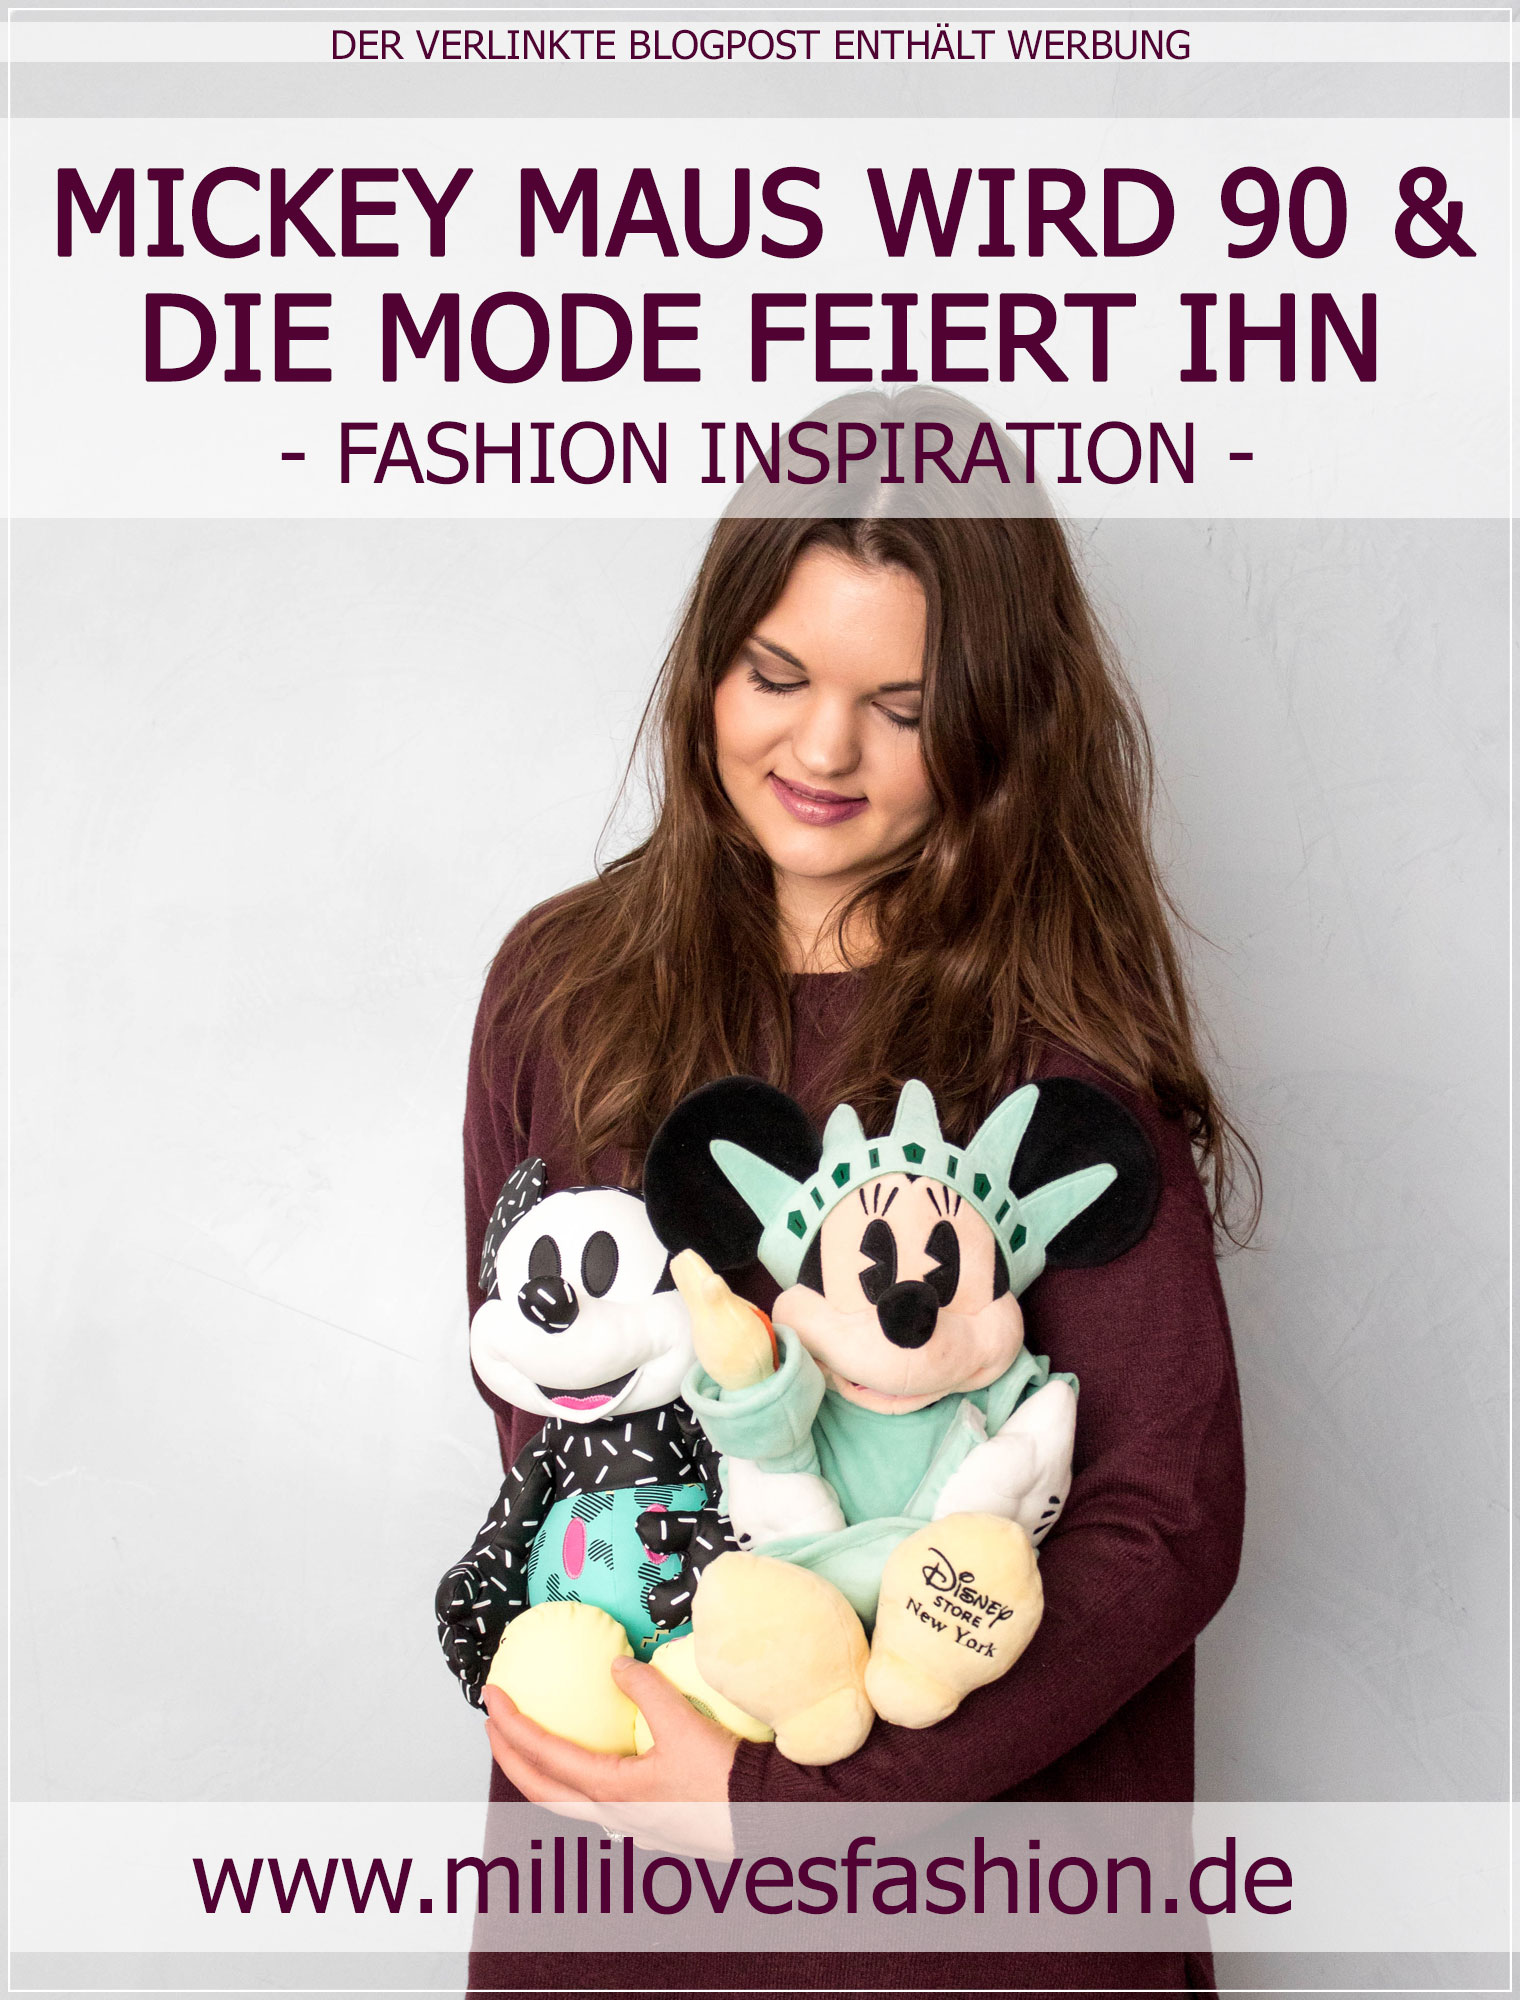 Mickey Maus, Disney, Mickey wird 90, Minnie Maus, Disney Blogger, Modetrends, Blogger, Fashionblogger, Ruhrgebiet